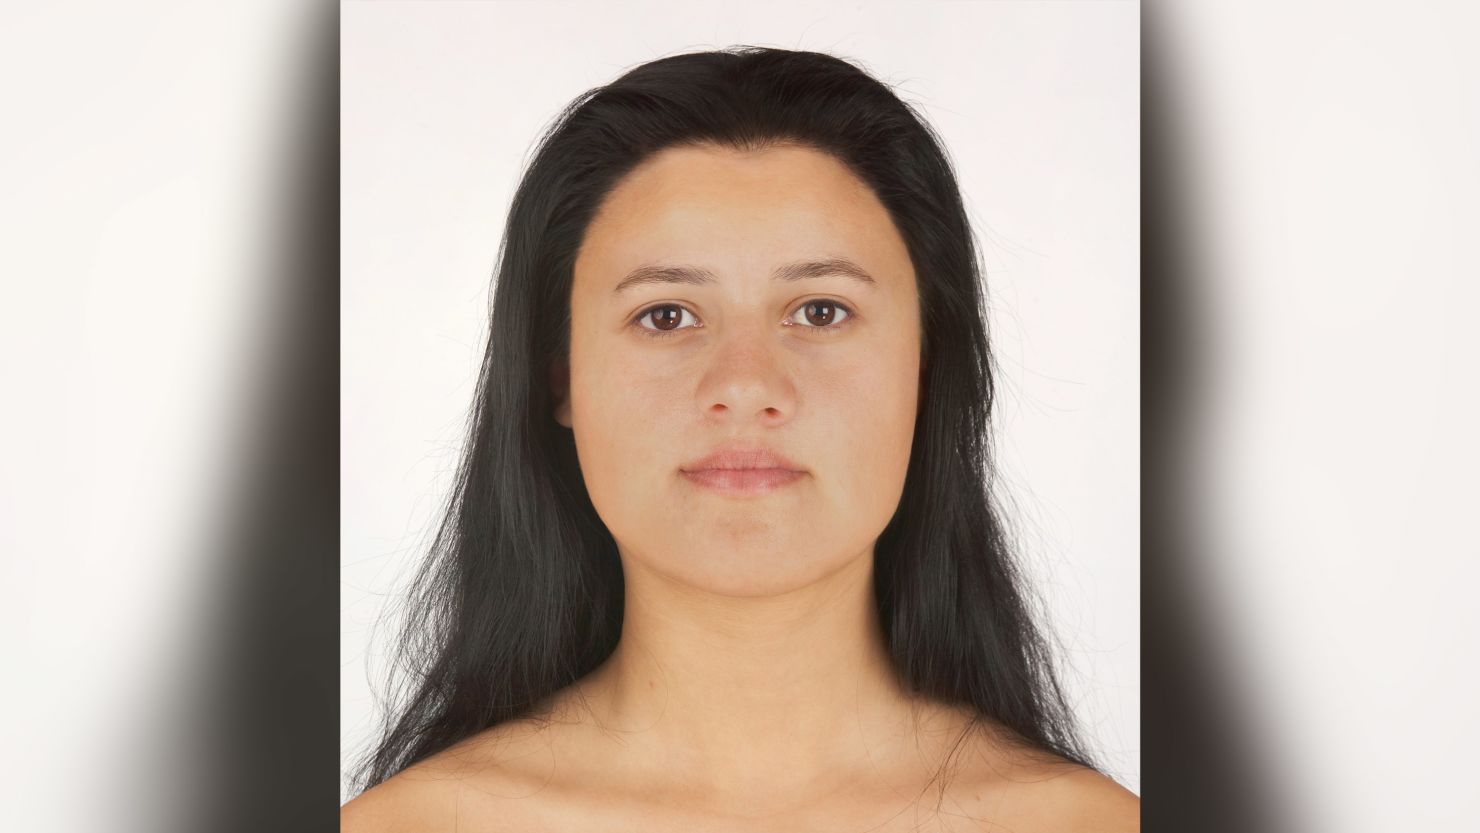 A DNA analysis shows that Ava had black hair, brown eyes and a Mediterranean complexion.